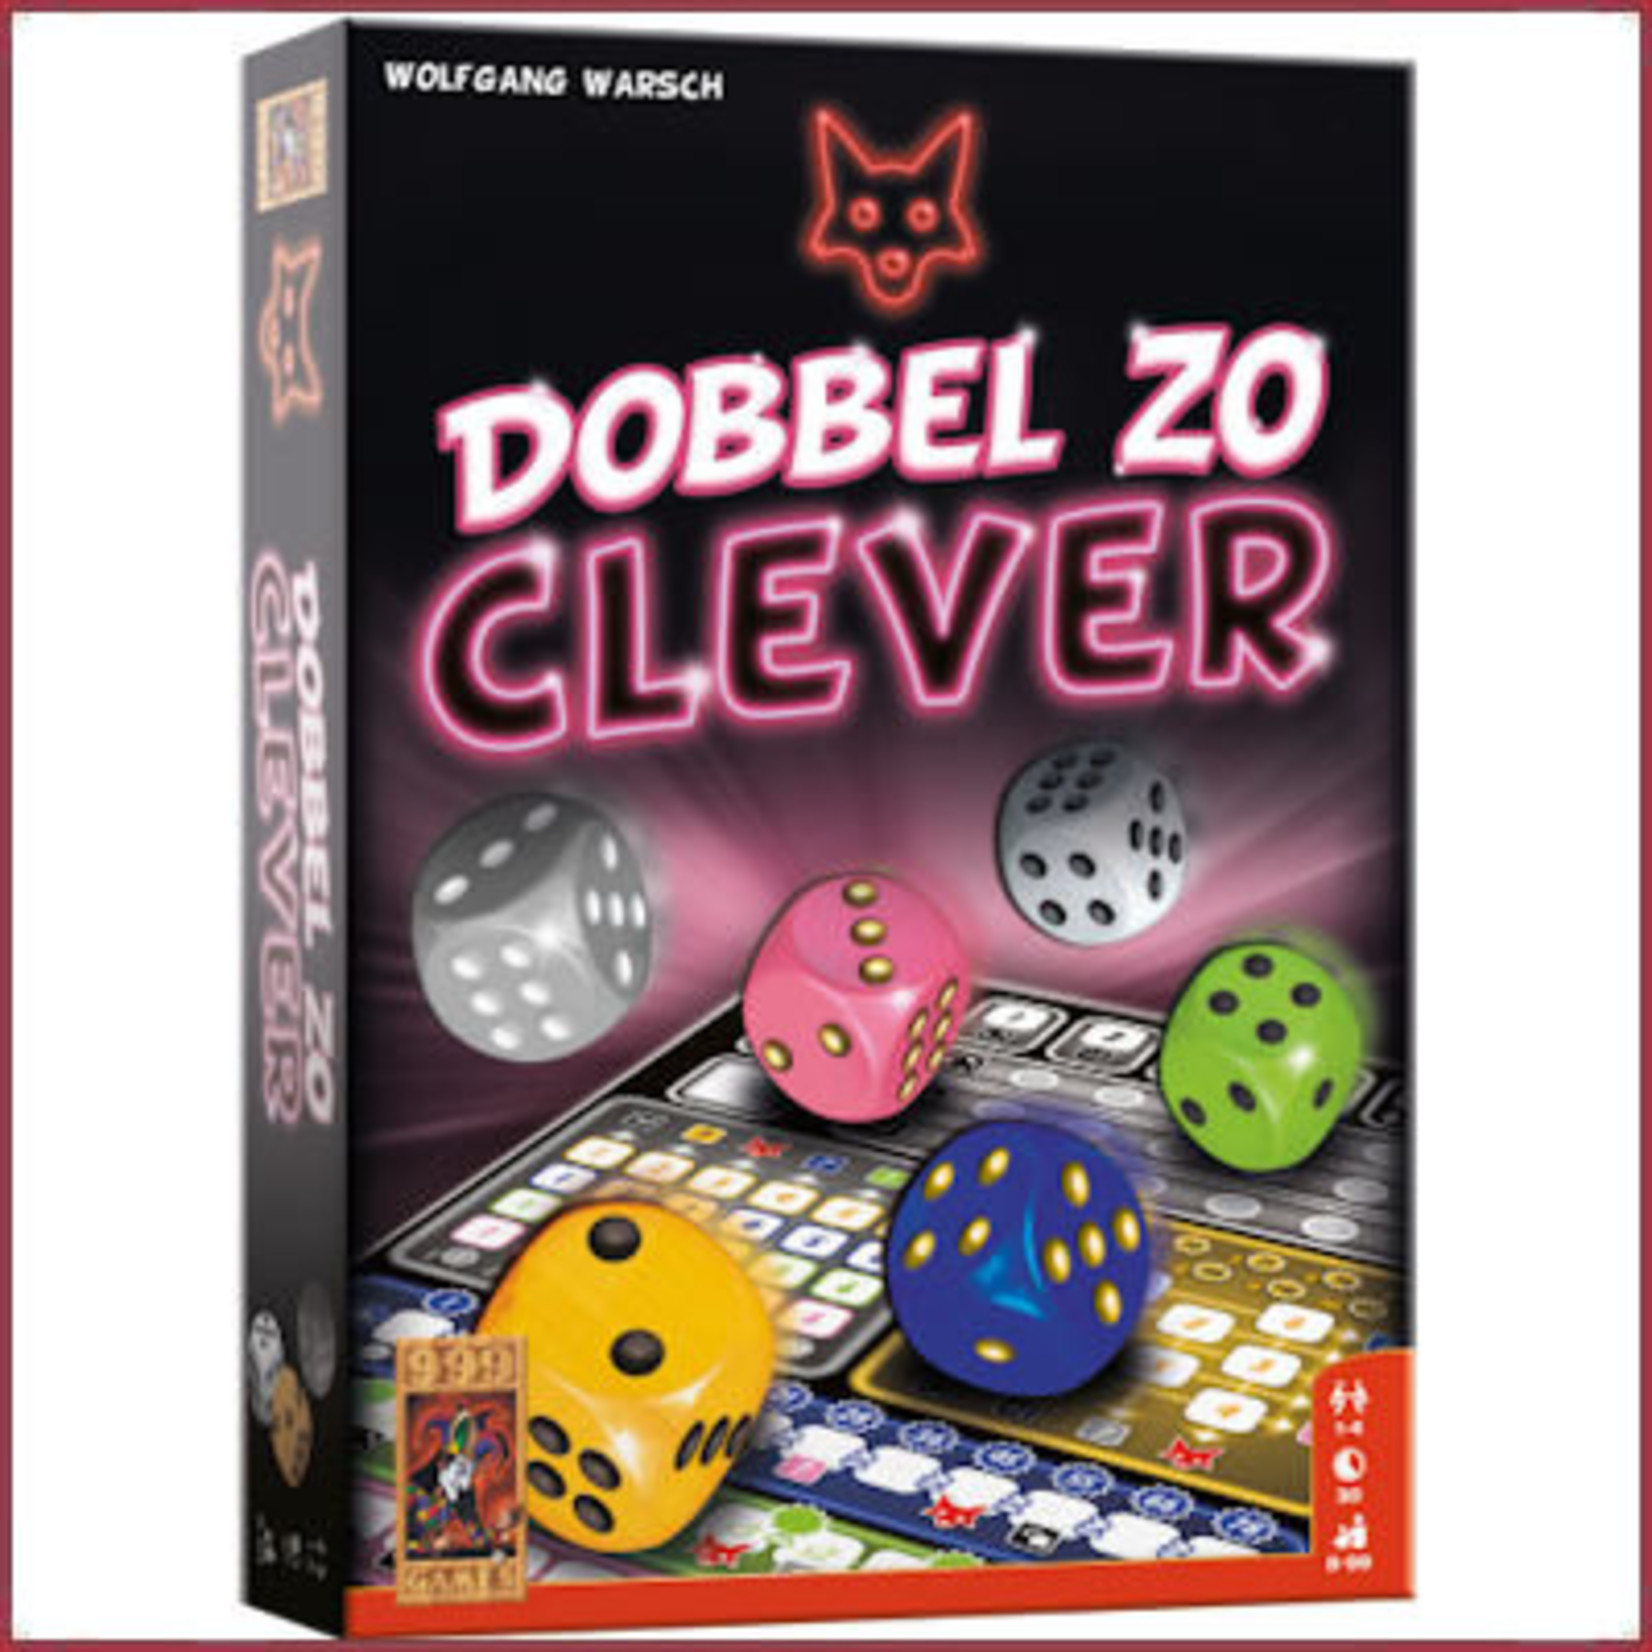 999 games Dobbel zo Clever